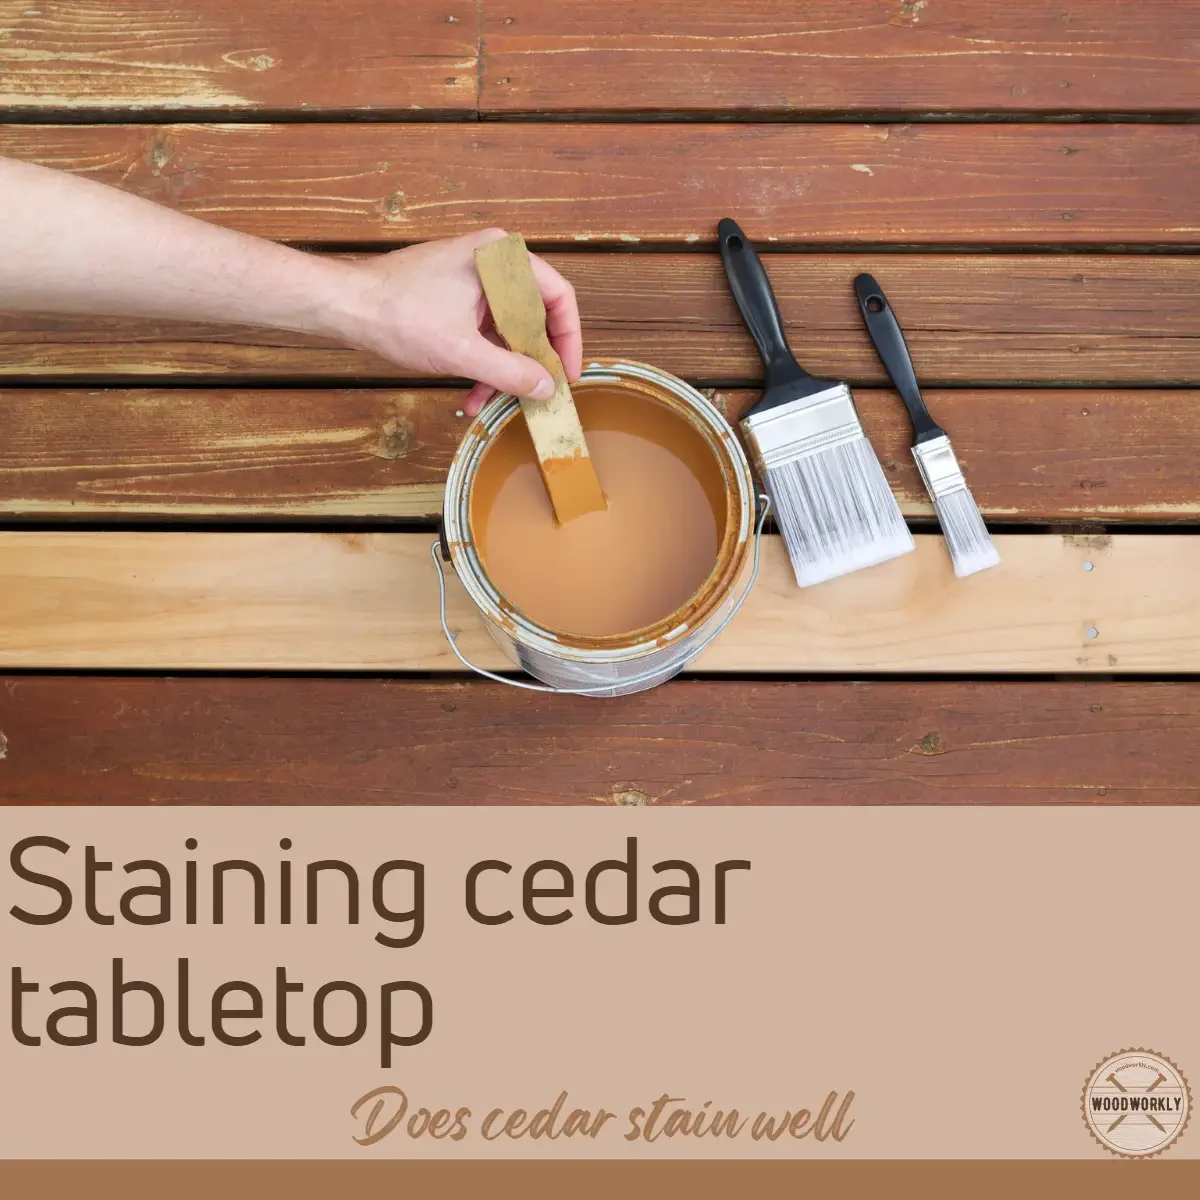 Staining cedar tabletop